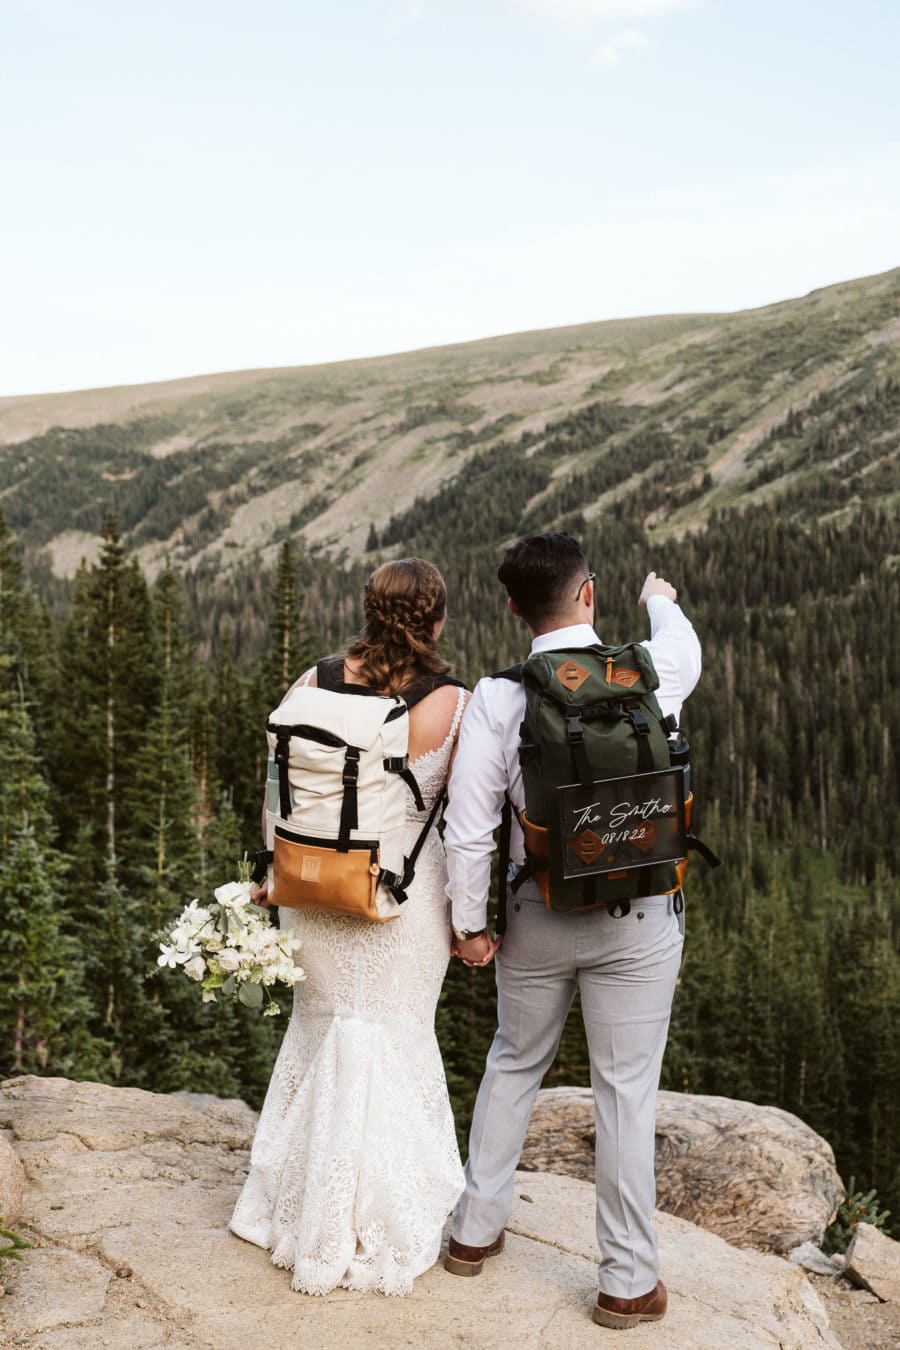 Custom elopement backpack signs